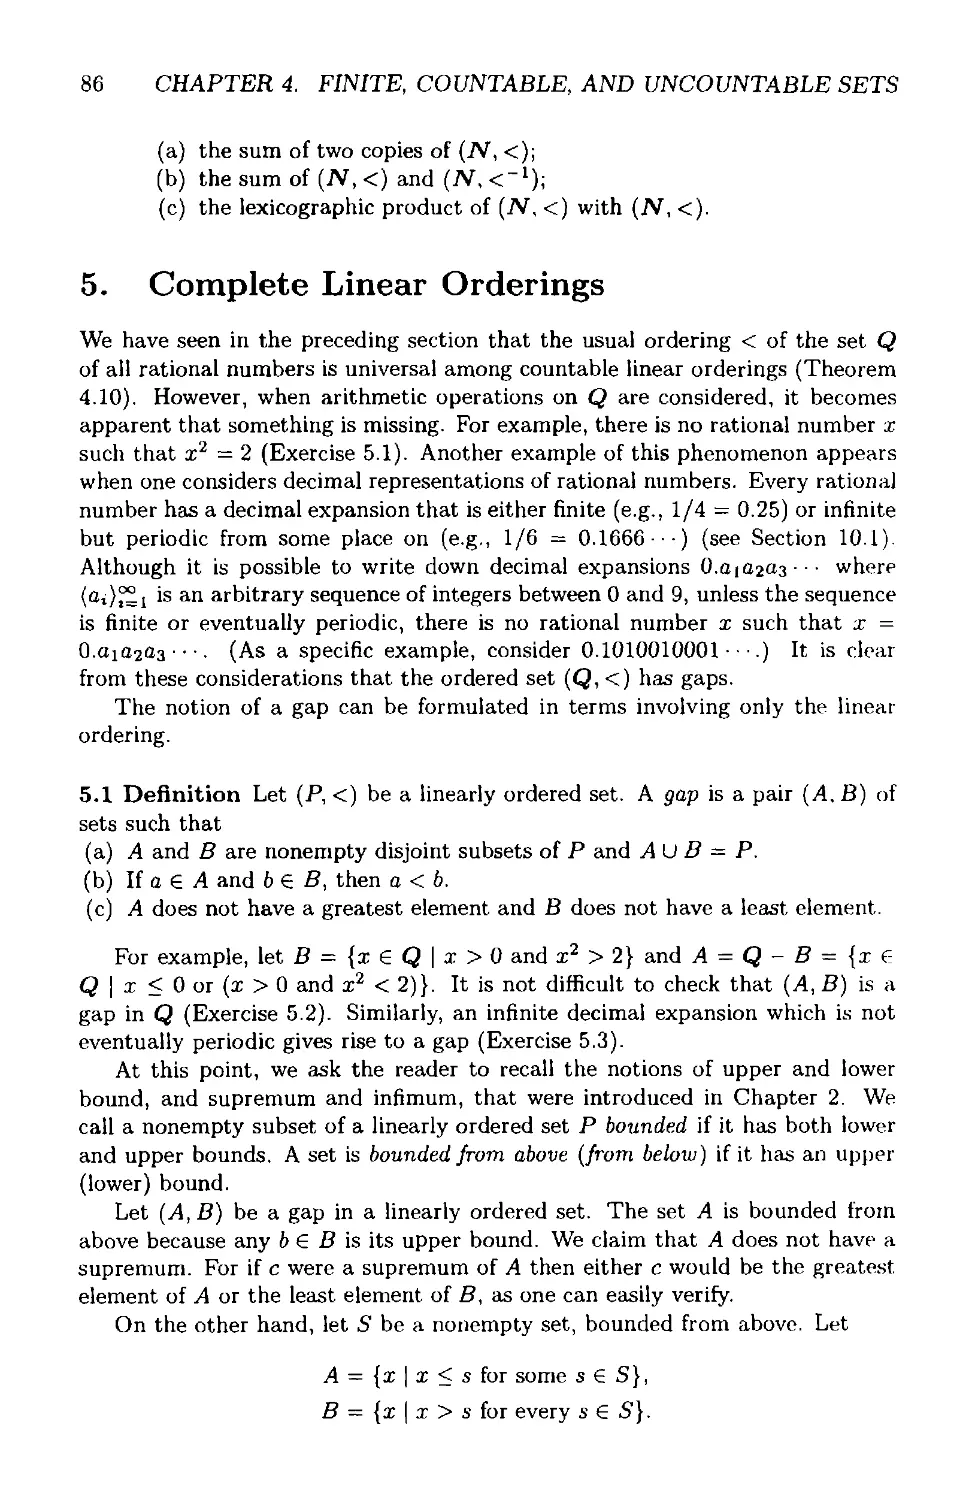 5 Complete Linear Orderings